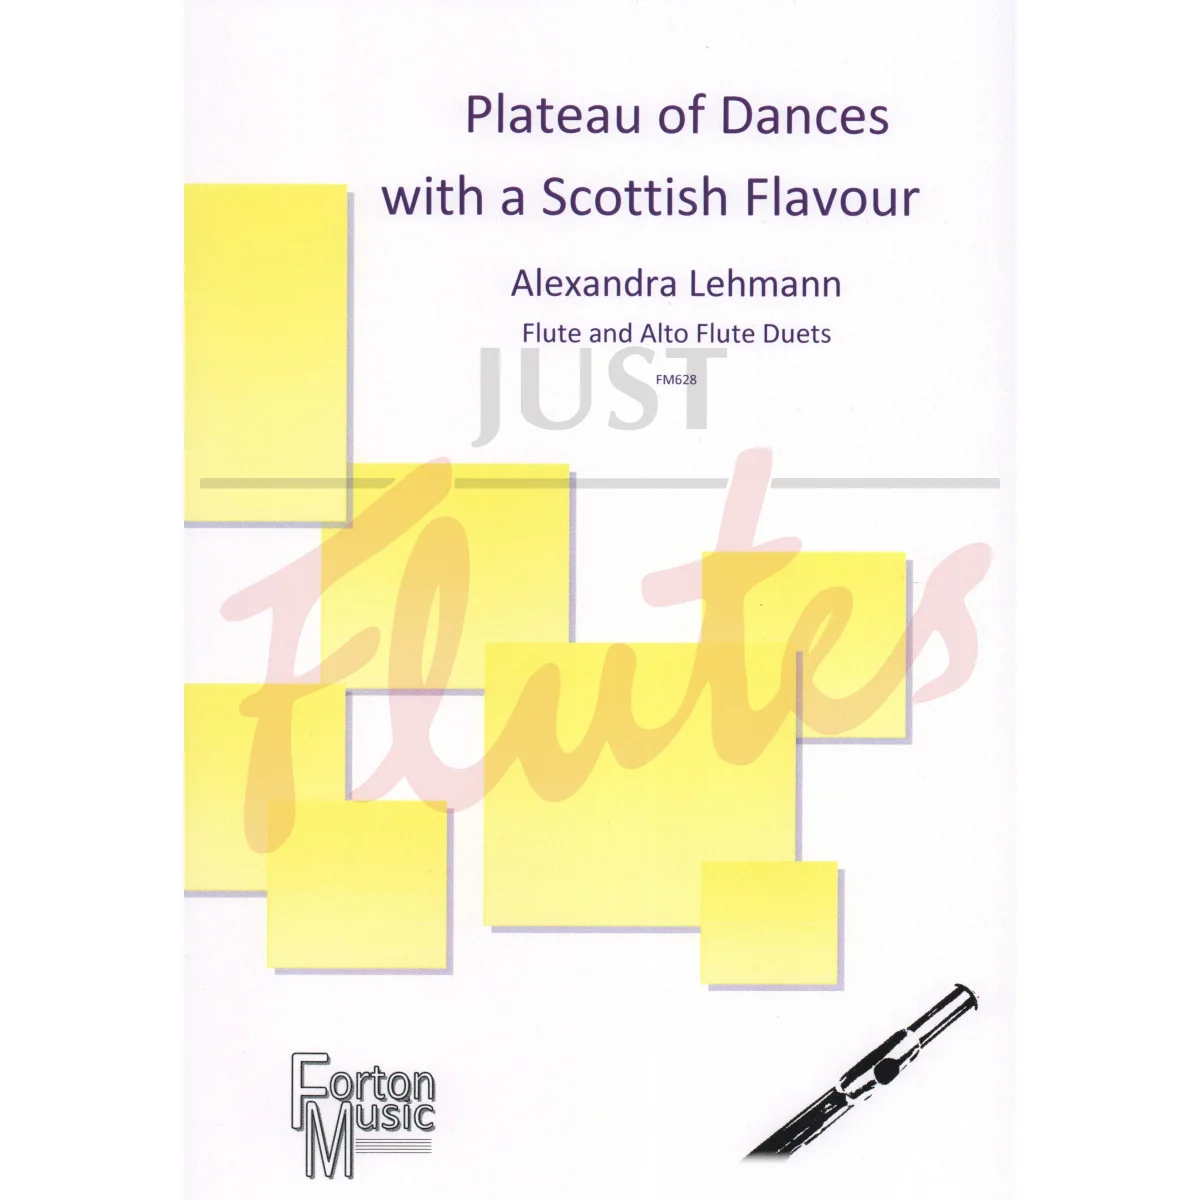 Plateau of Dances with a Scottish Flavour for Flute and Alto Flute